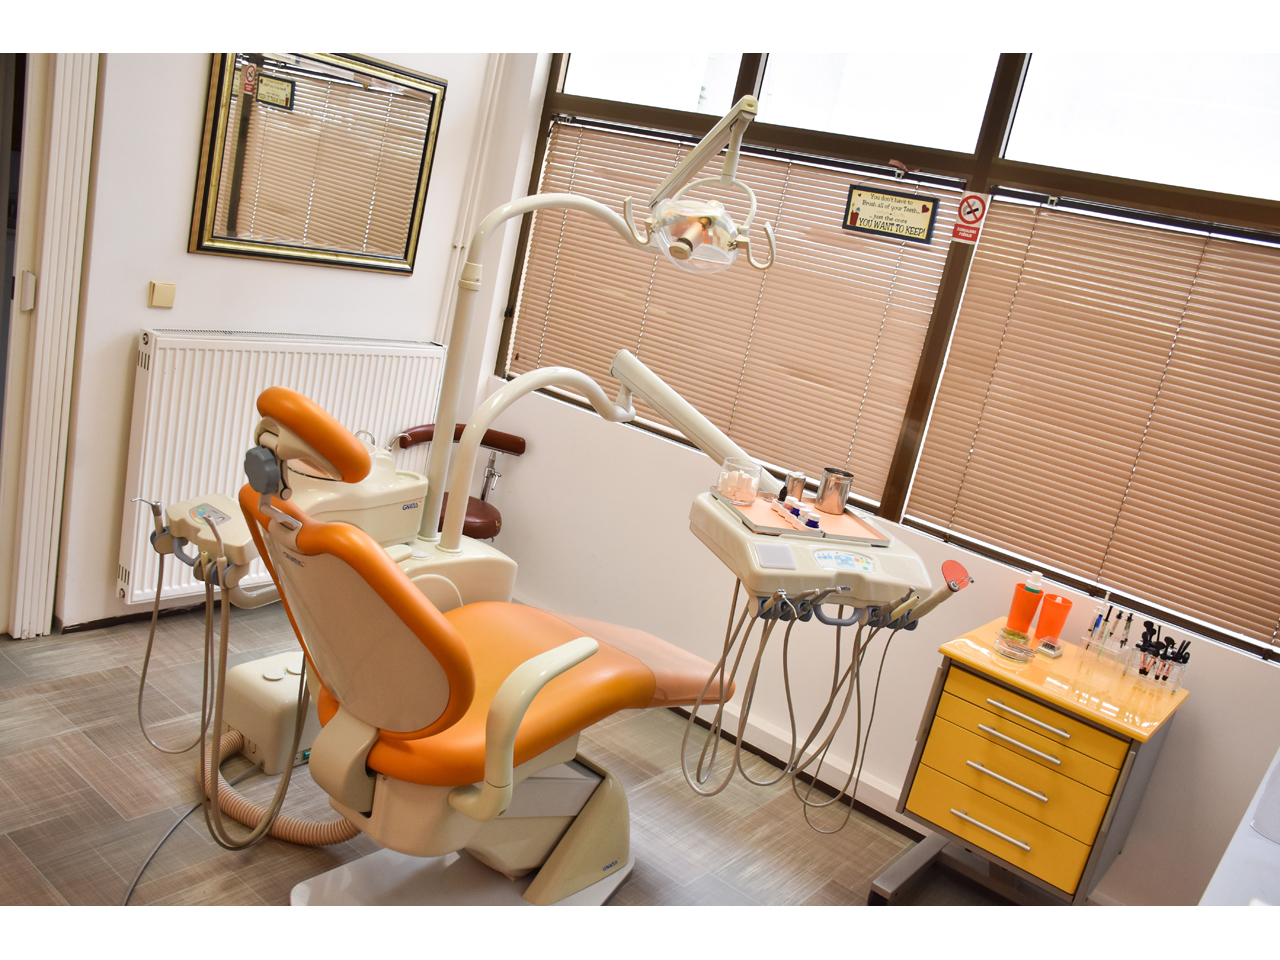 Photo 5 - DR ASANIN - DENTAL OFFICE Dental surgery Belgrade